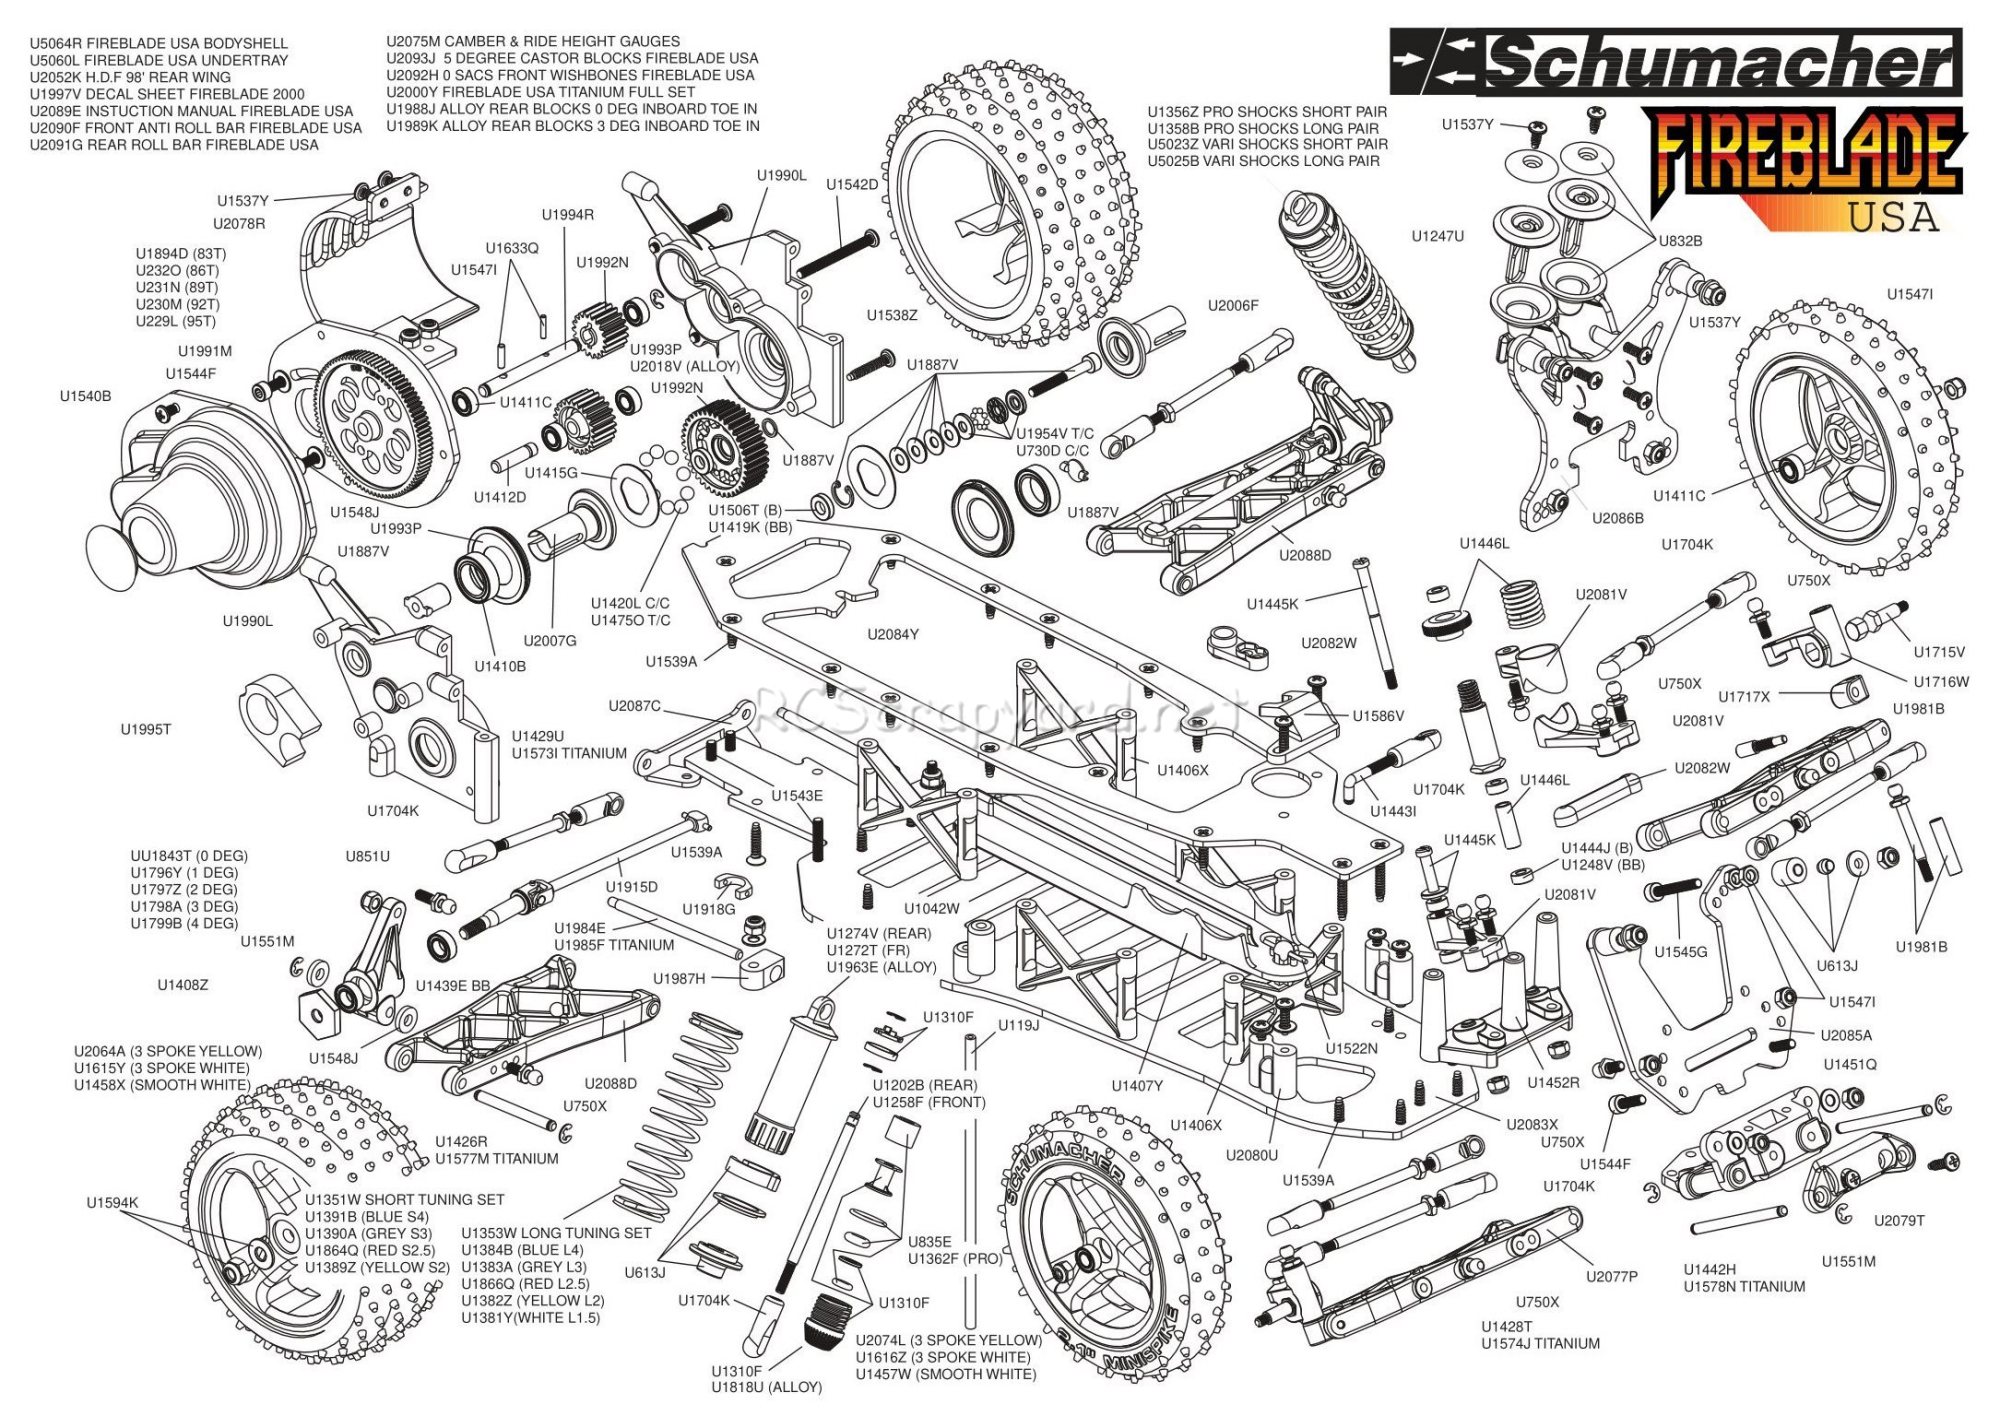 Schumacher - Fireblade 2000 USA - Exploded View - Page 1